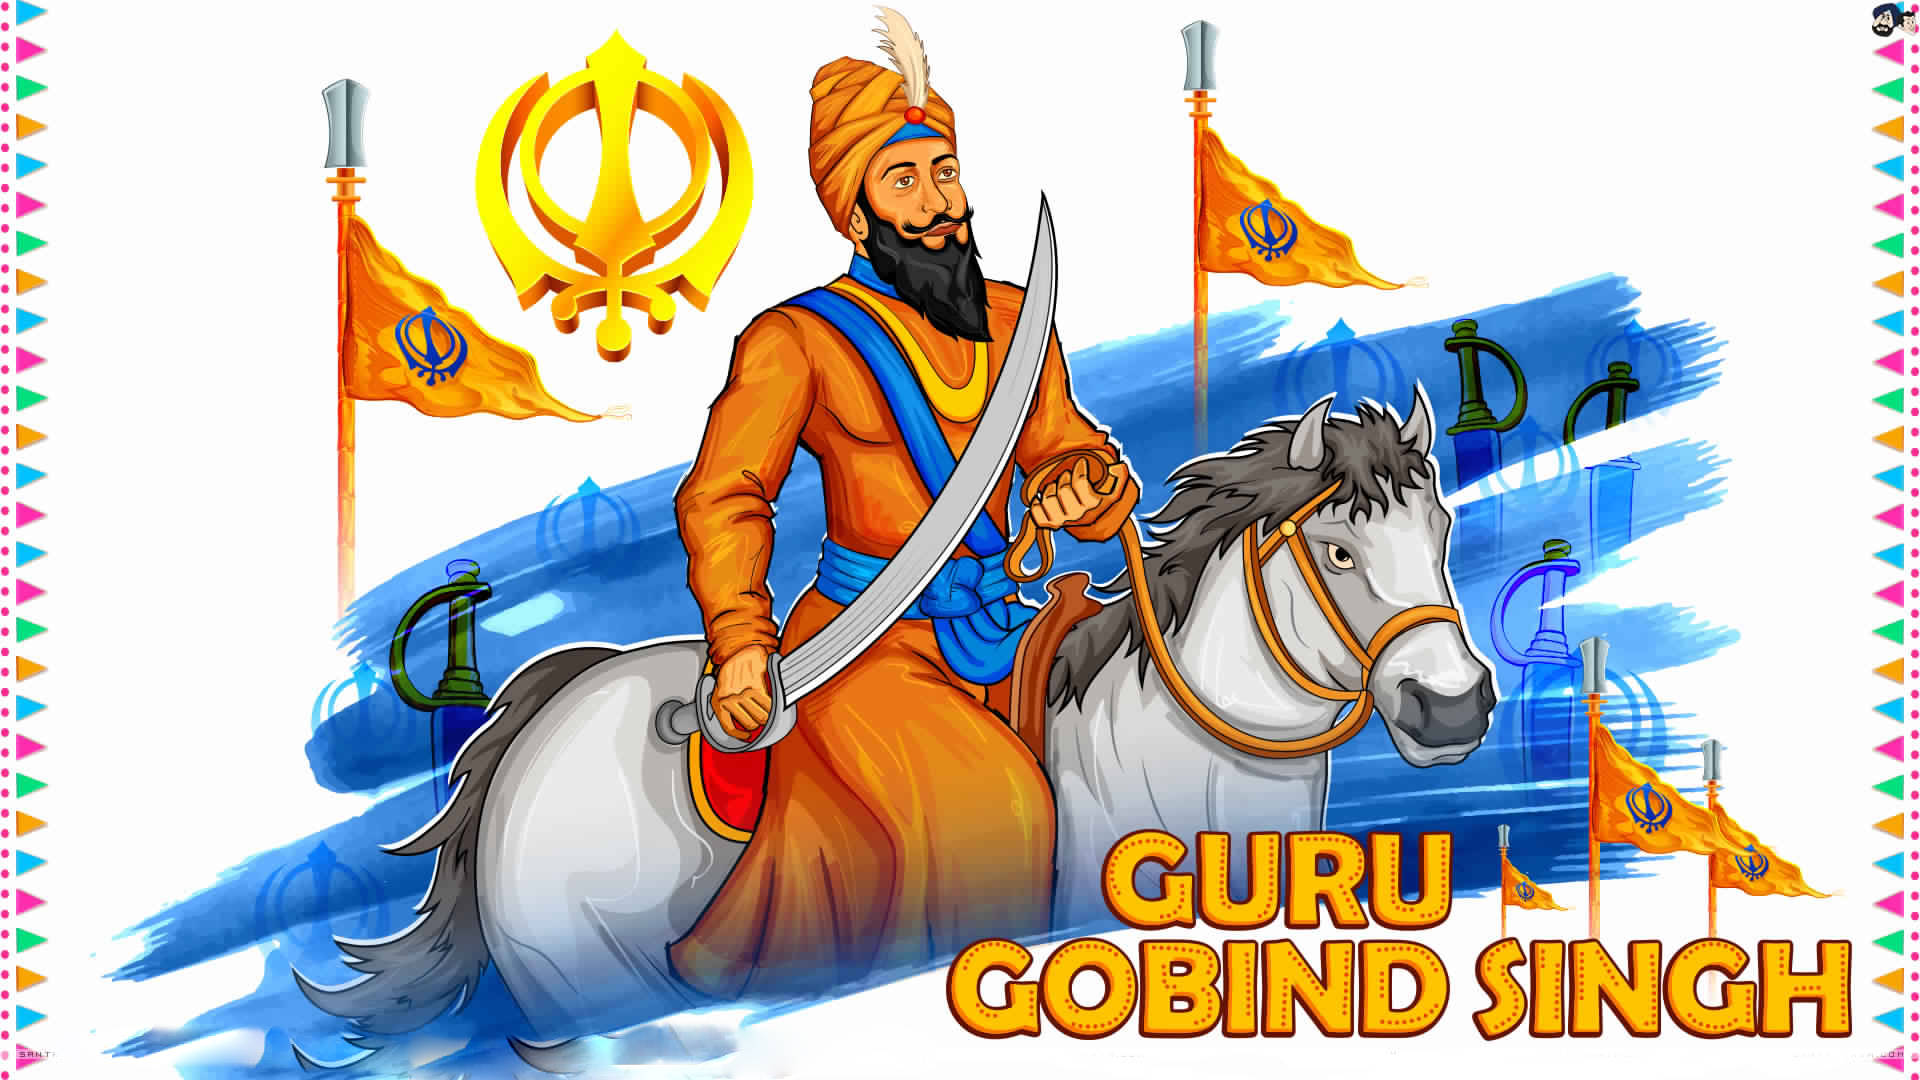 Guru Gobind Singh Ji Riding Horse Background